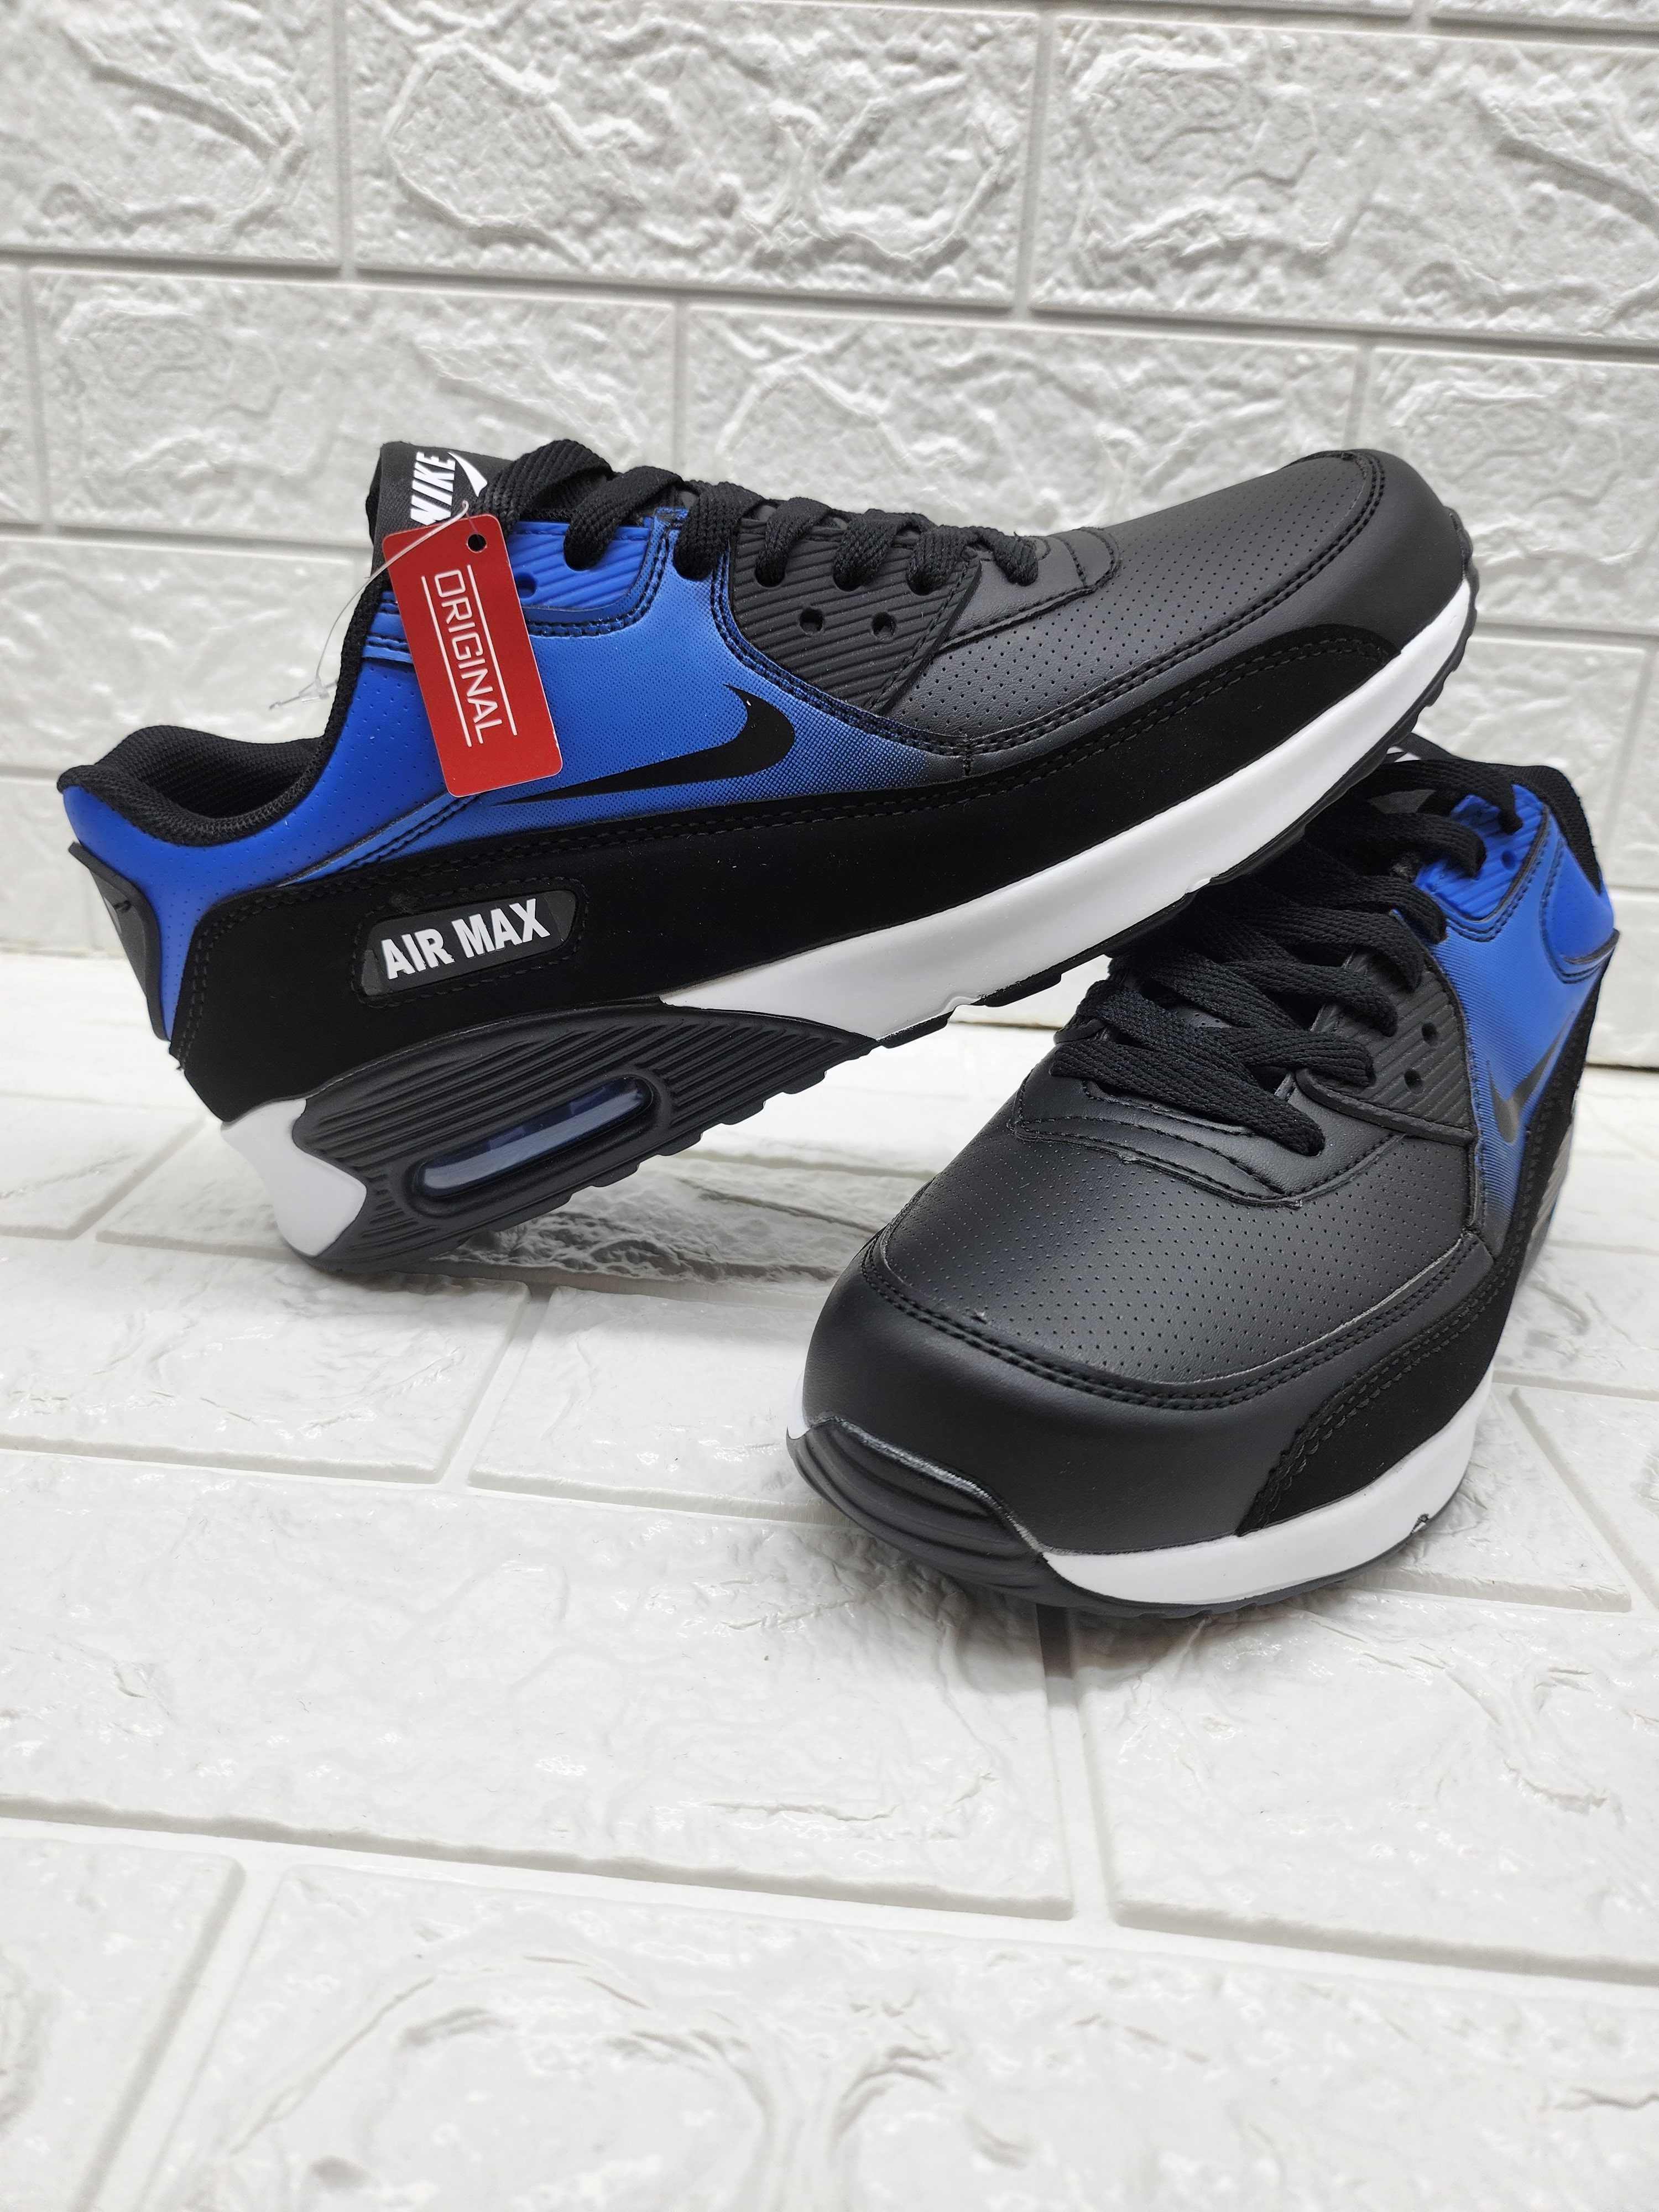 Nowe obuwie meskie Nike AirMax 41,42,43,44,45,46 inne modele na priv